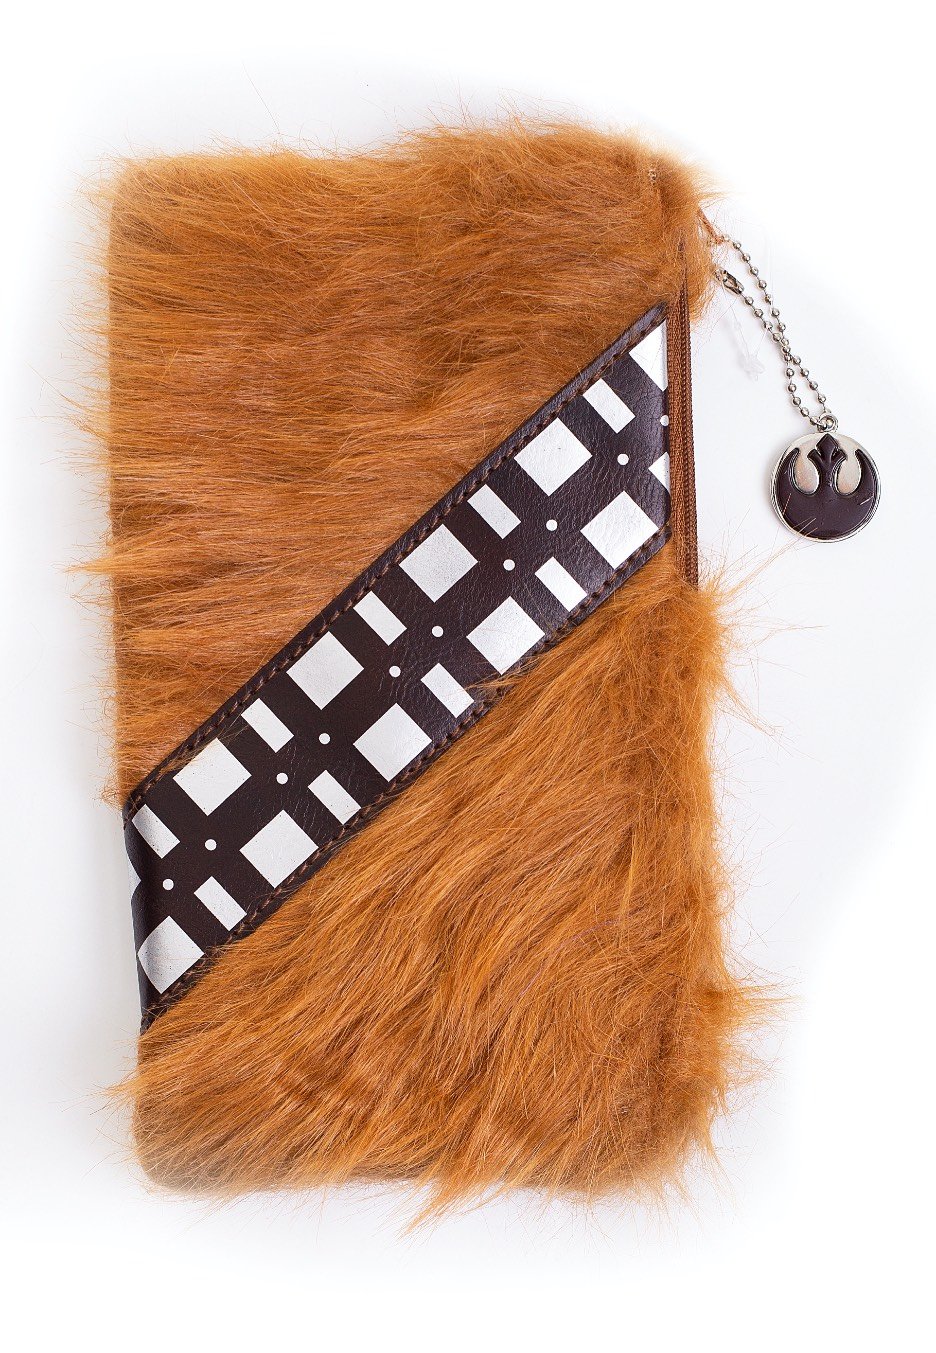 Star Wars - Chewbacca Premium - Bag